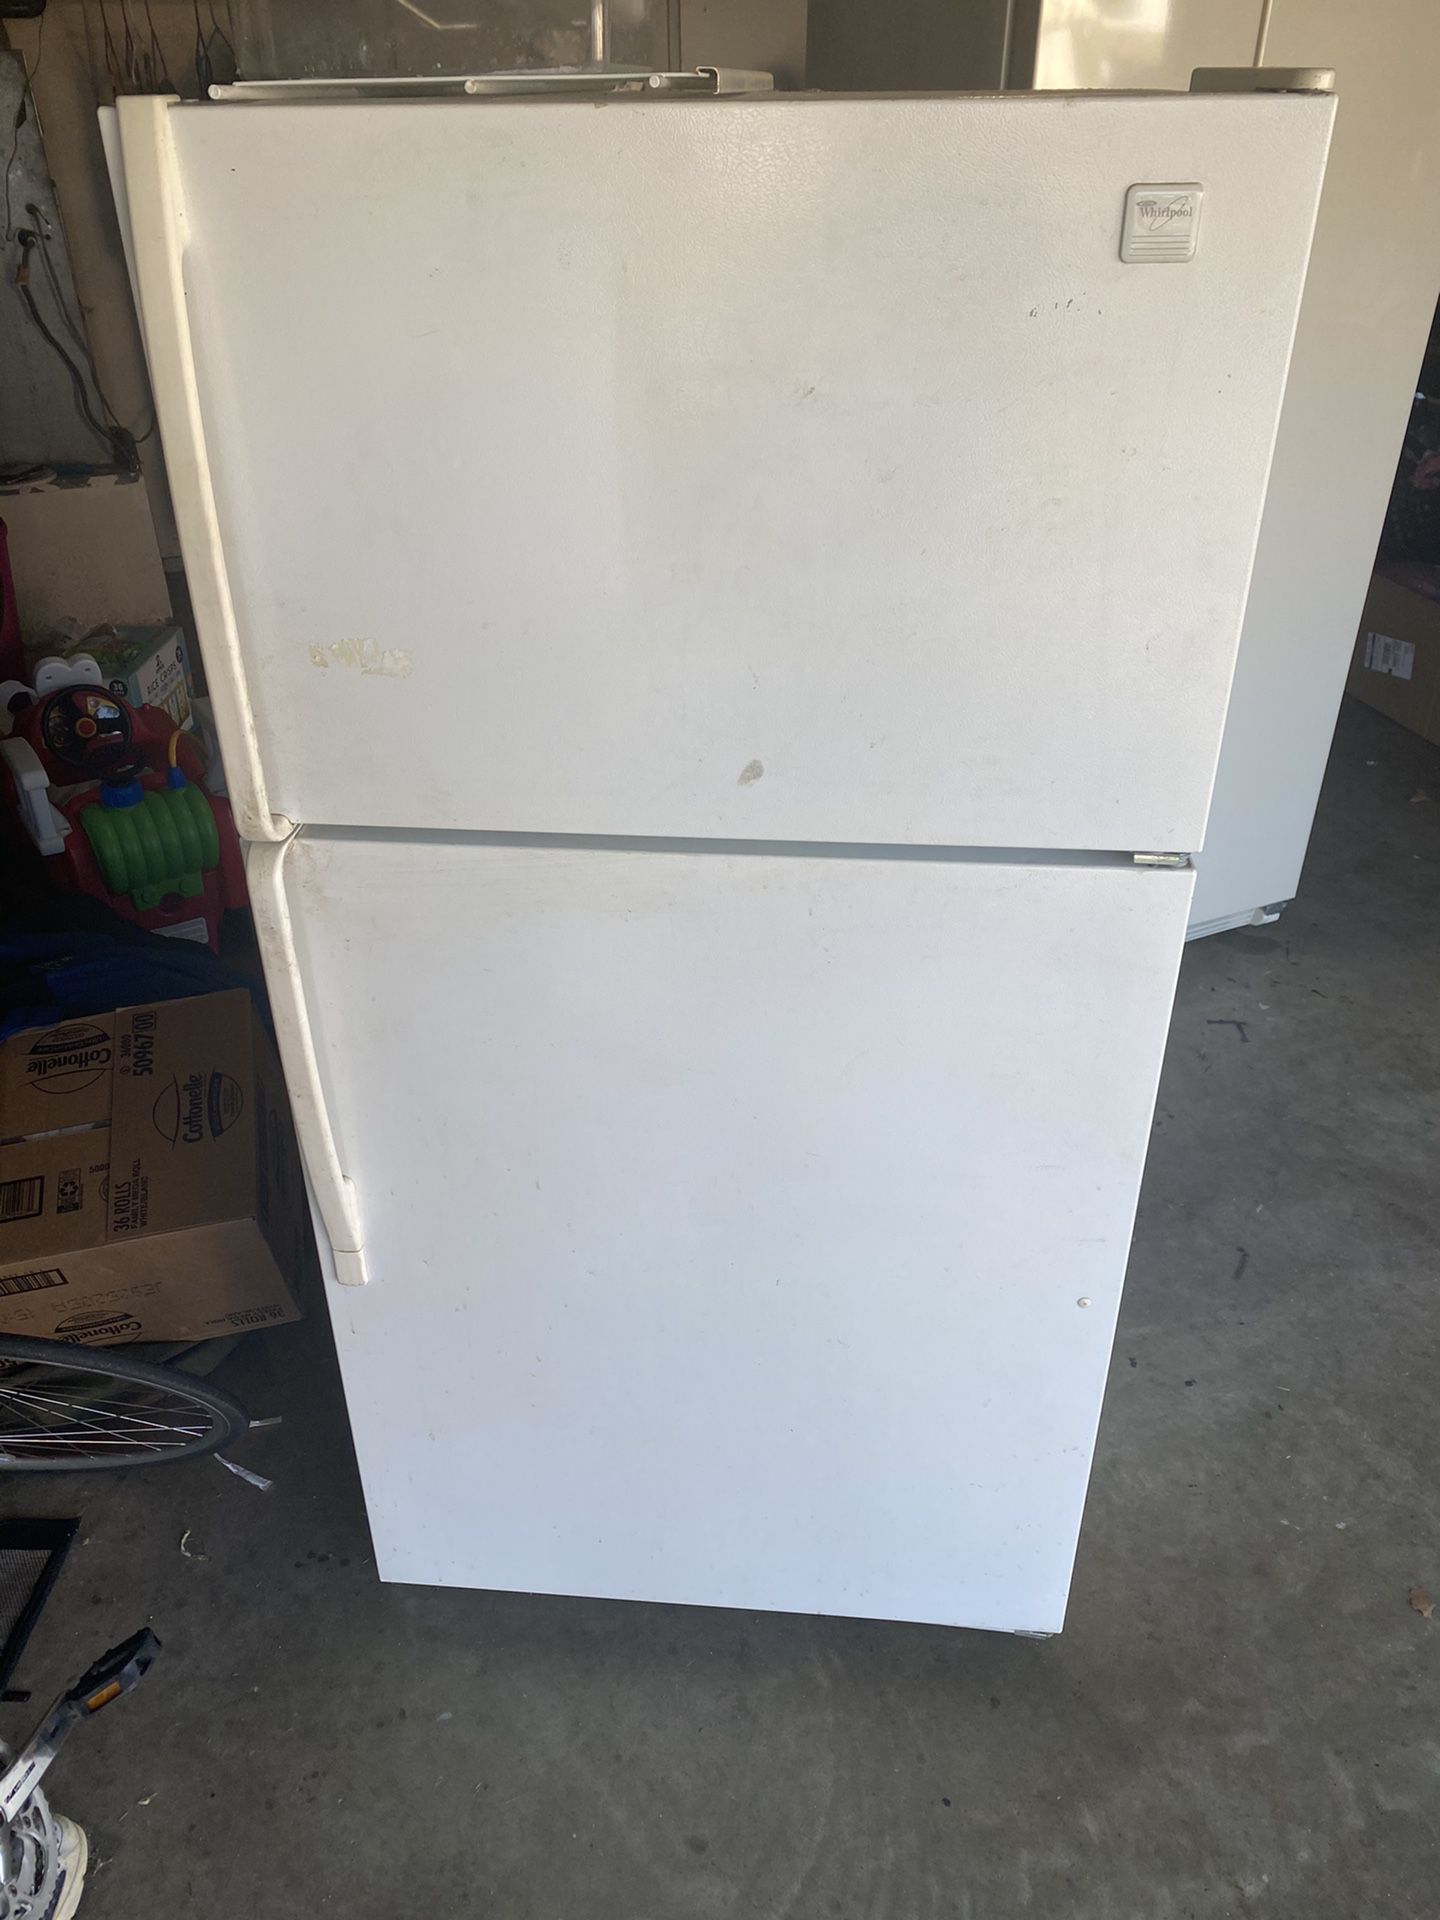 20.8 cubic feet fridge Free for pickup